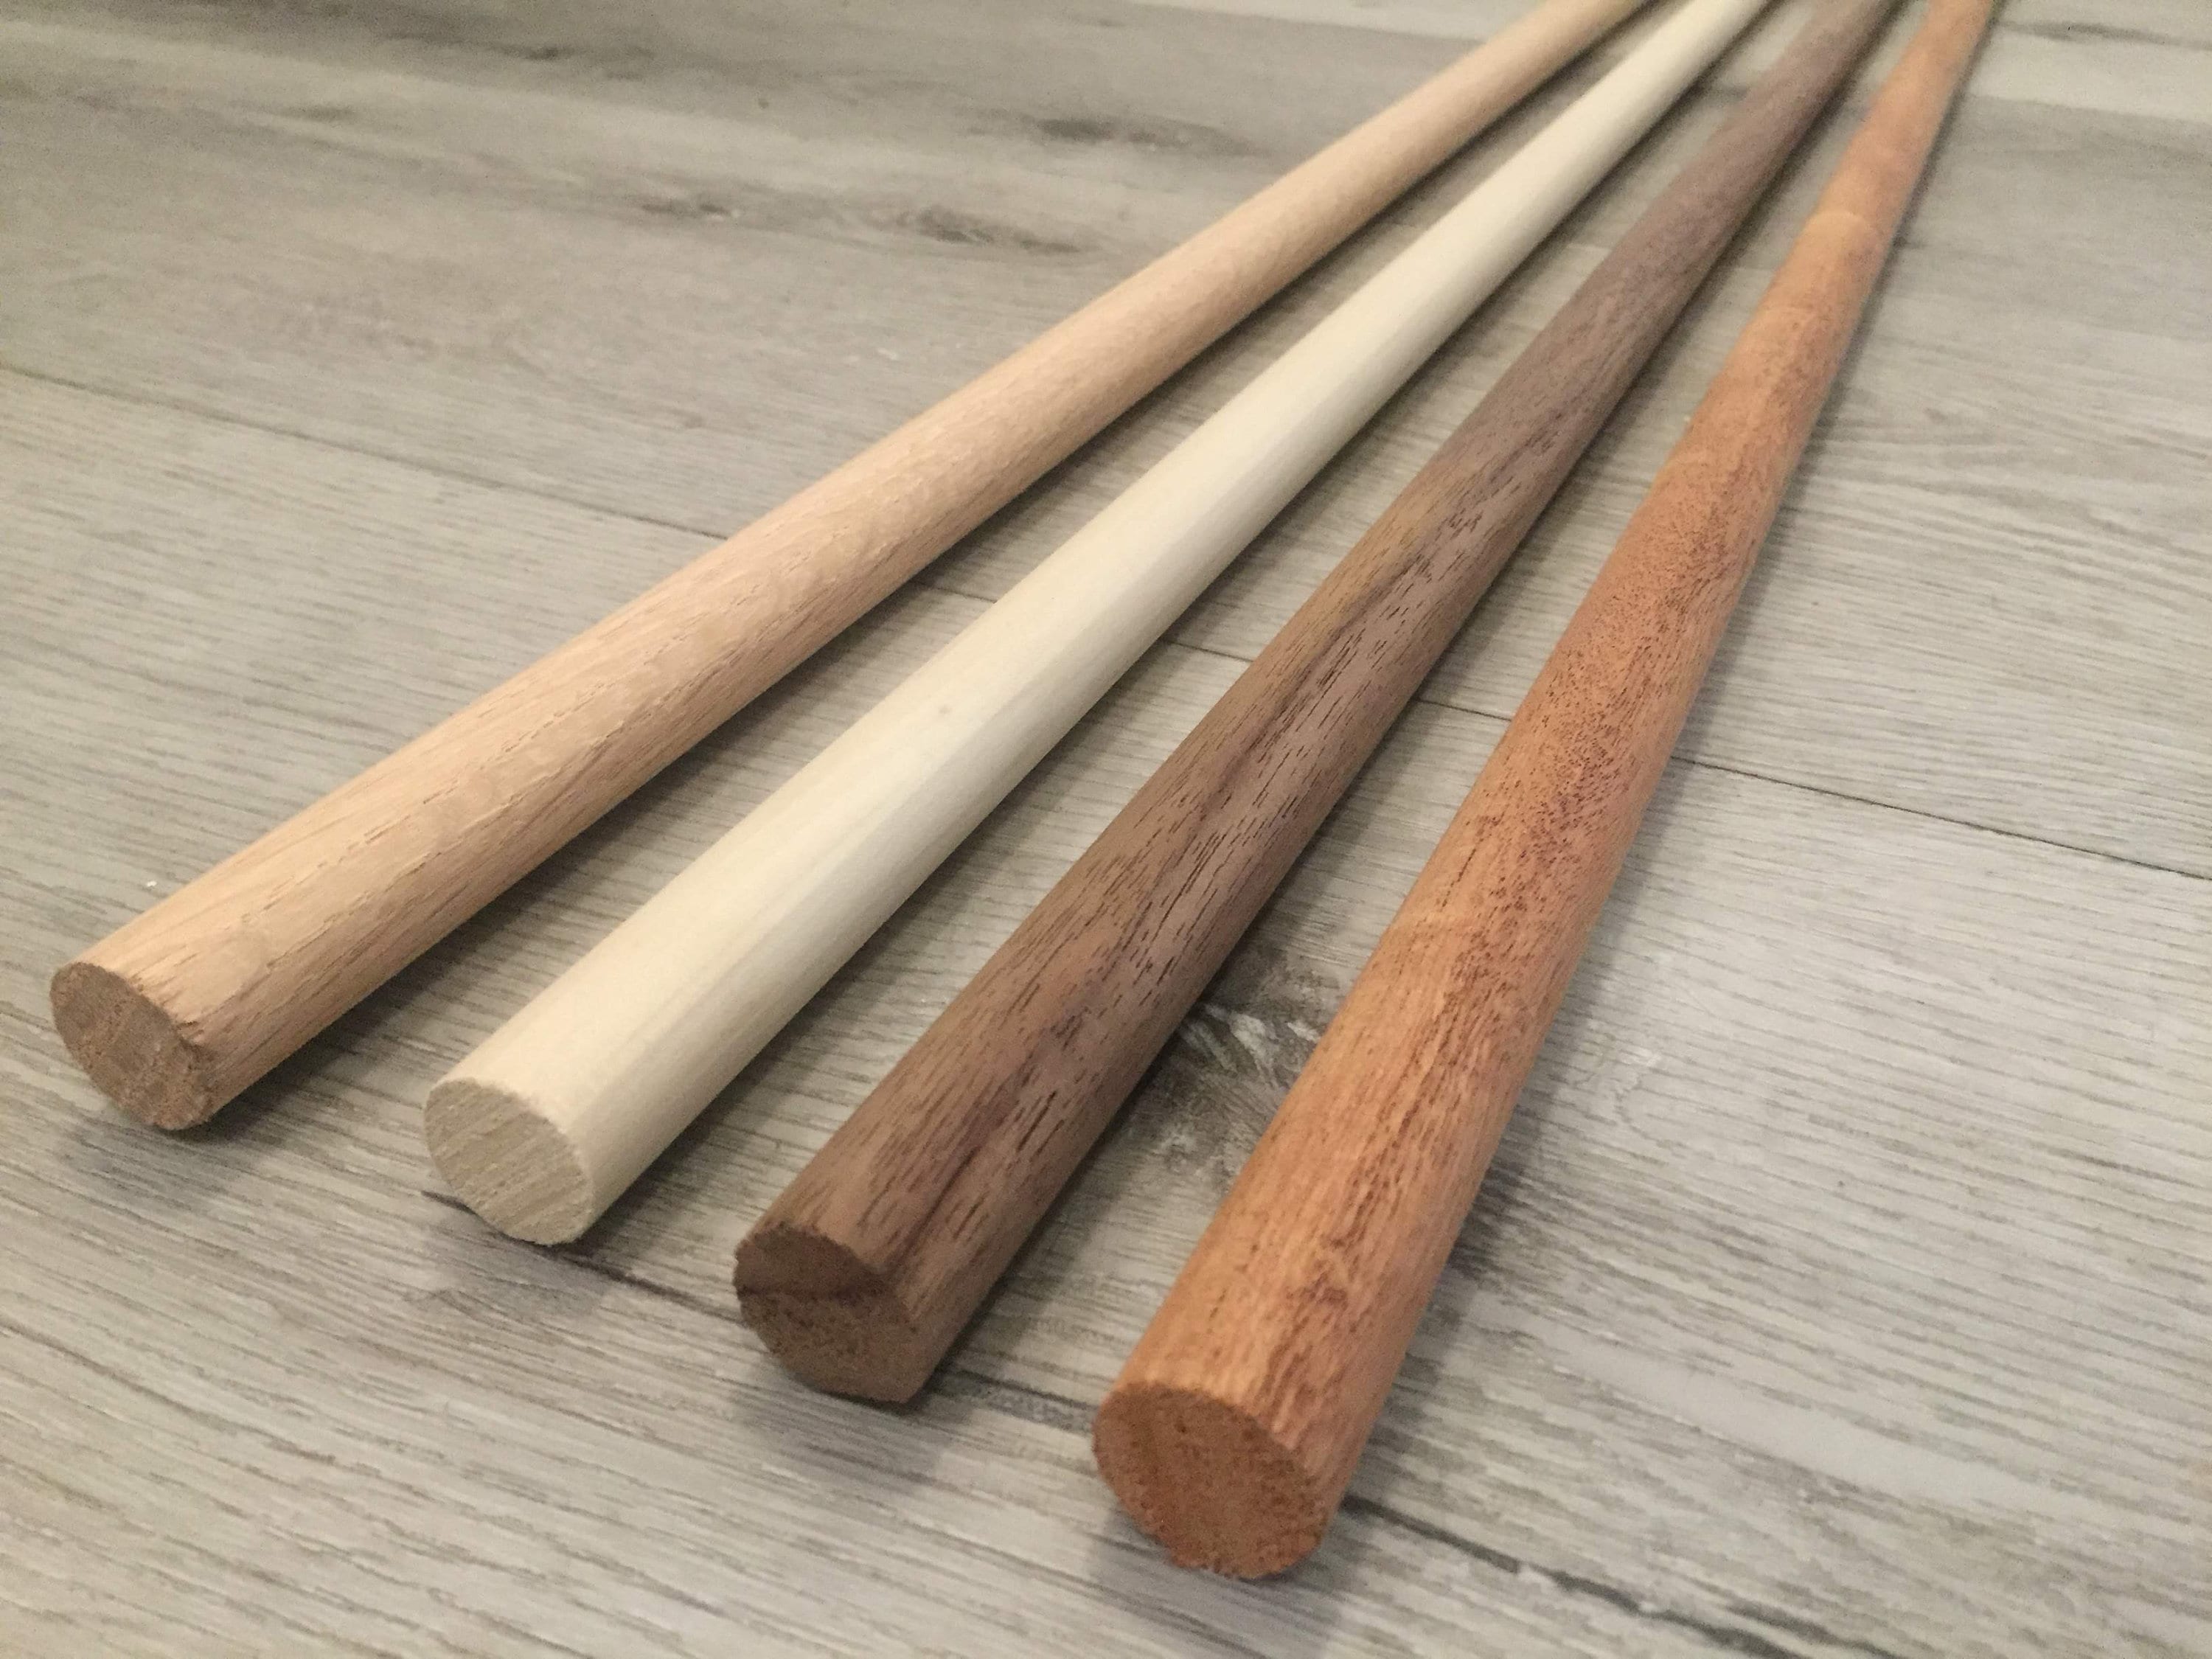 A wooden stick. Dowel Rod. Палка деревянная. Палка деревянная круглая. Круглые палки из дерева.